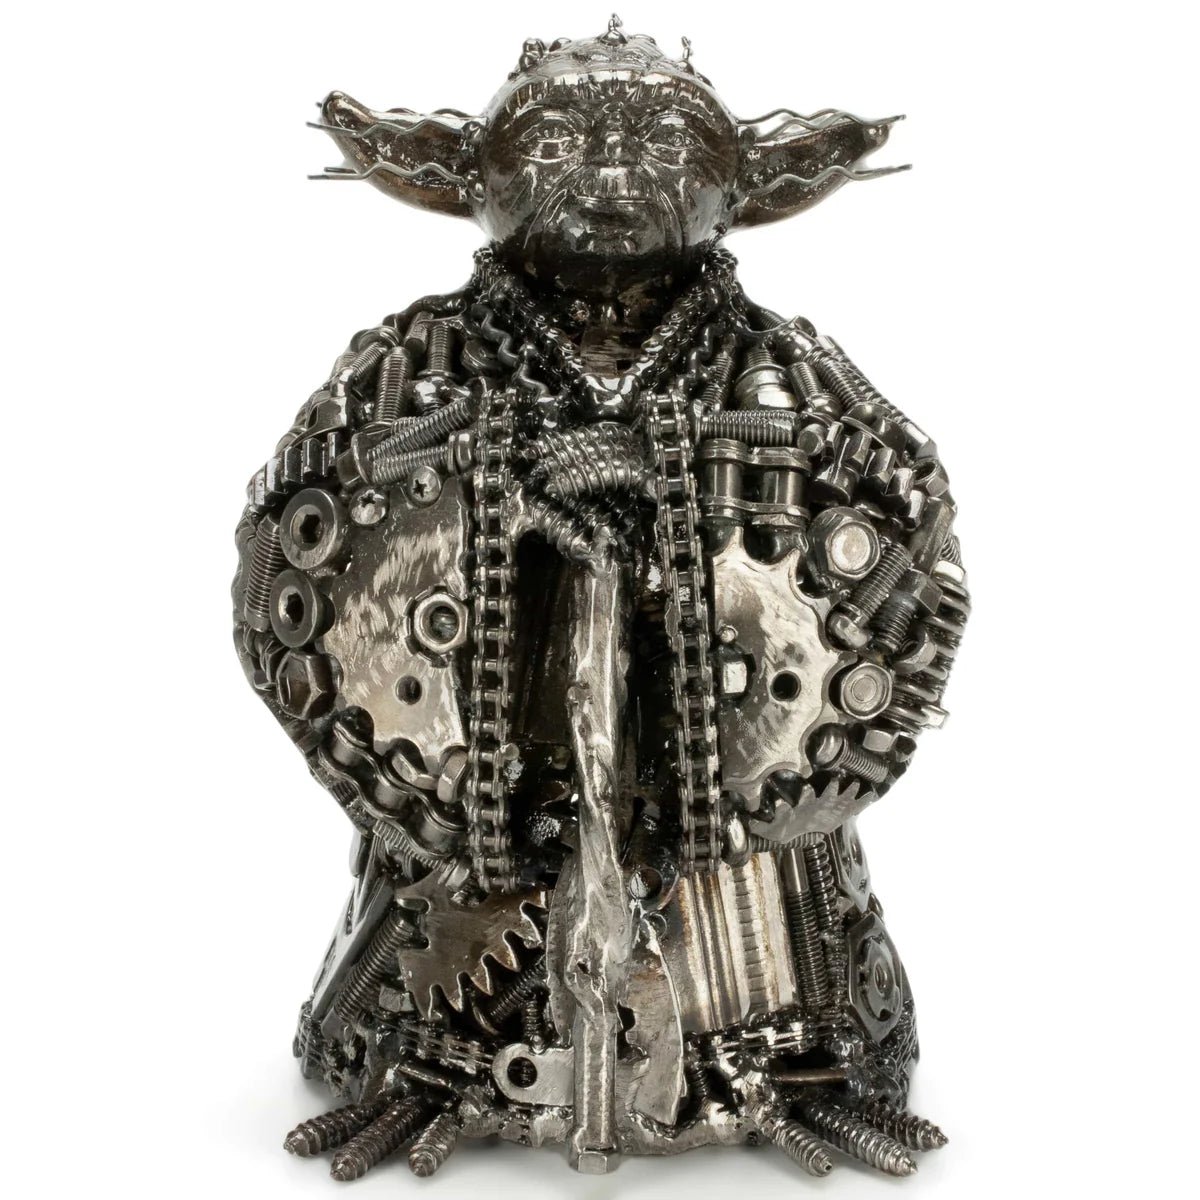 Yoda Inspired Recycled Metal Art Sculpture - Xformerz